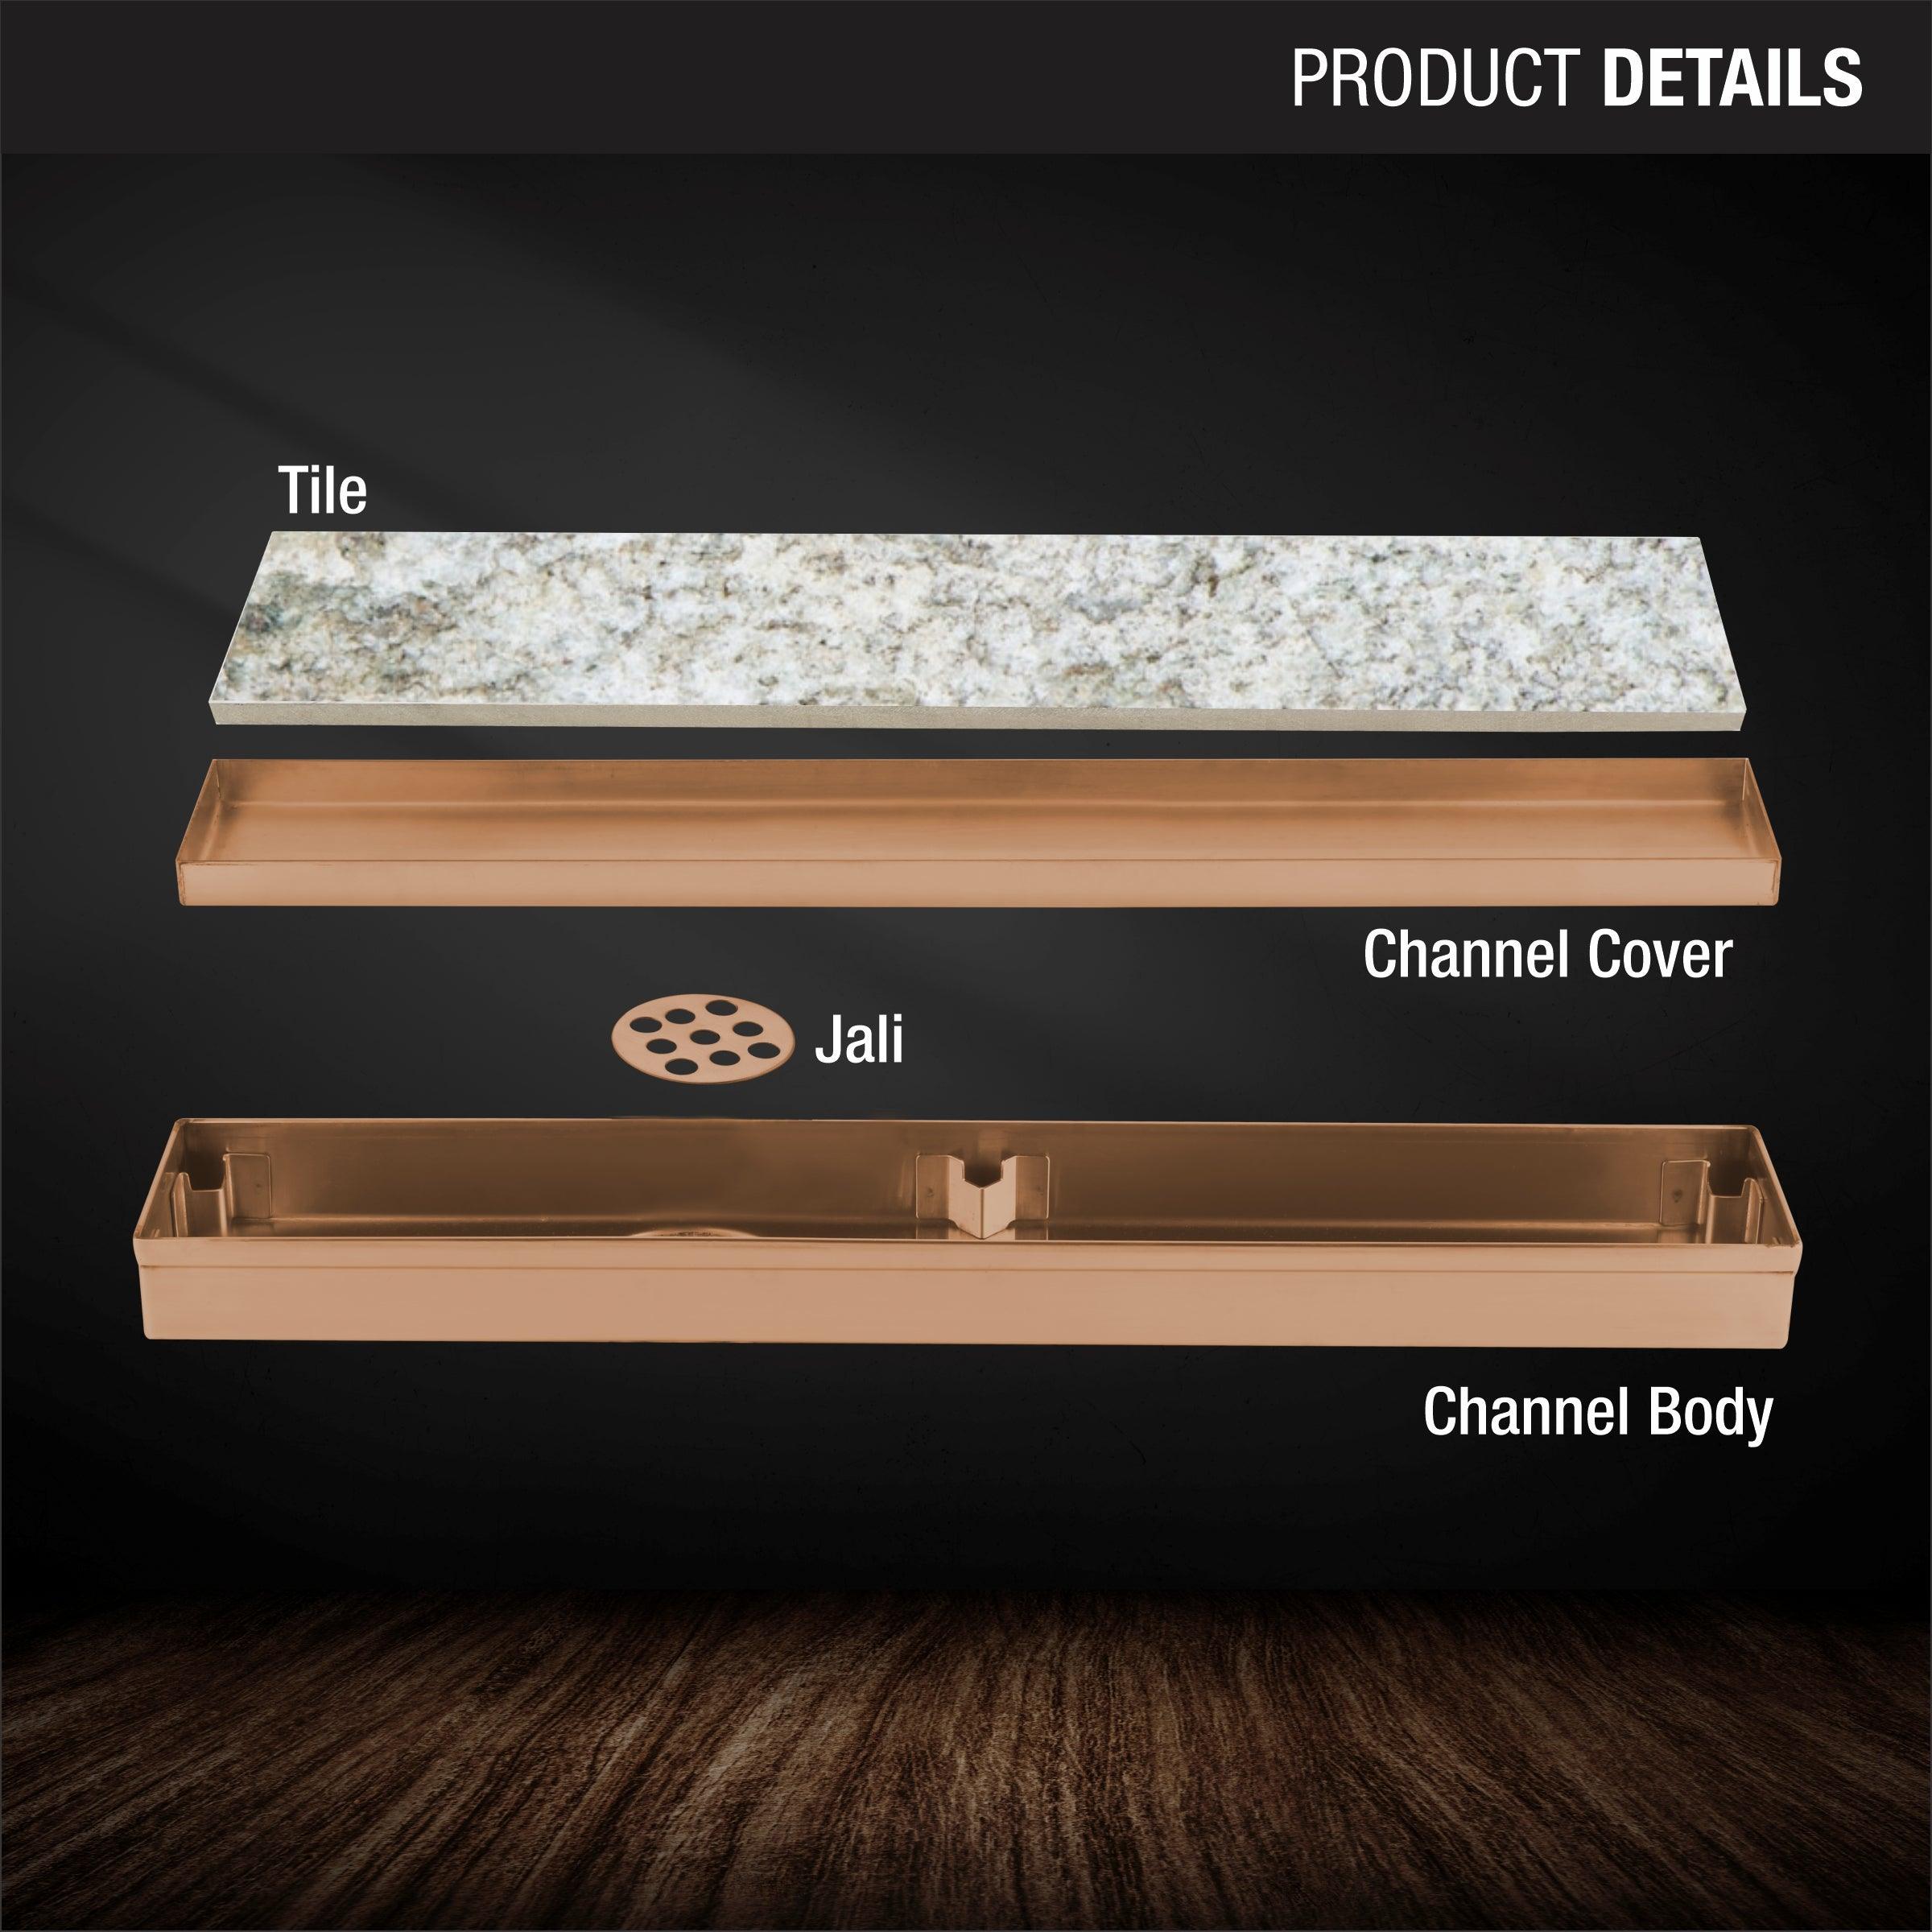 Tile Insert Shower Drain Channel - Antique Copper (12 x 2 Inches) product details